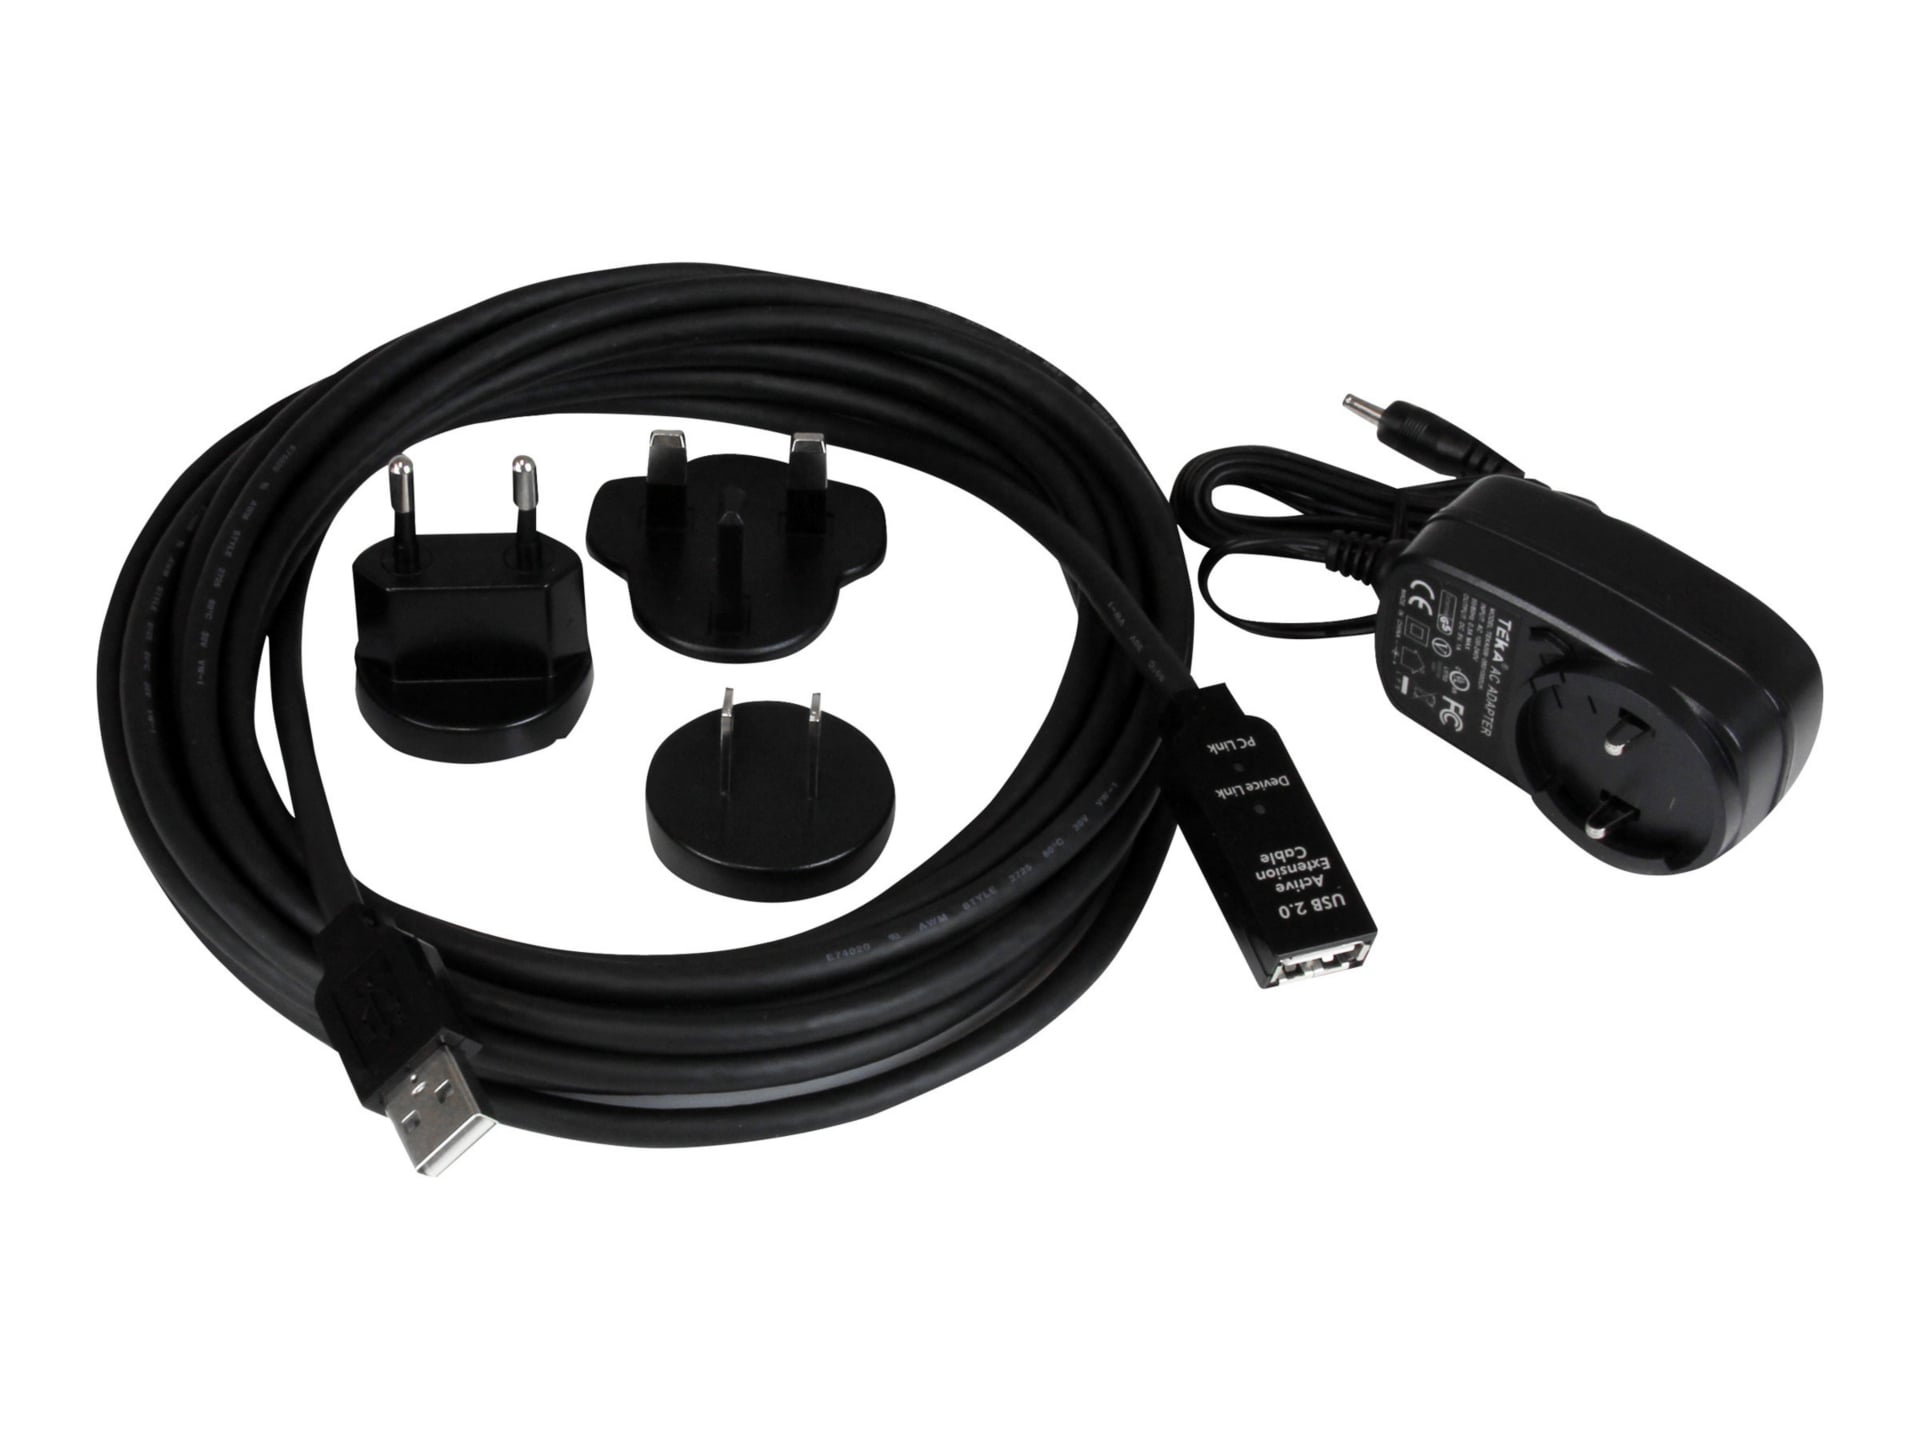 StarTech.com 5m USB 2.0 Active Extension Cable - M/F - Long USB Cable